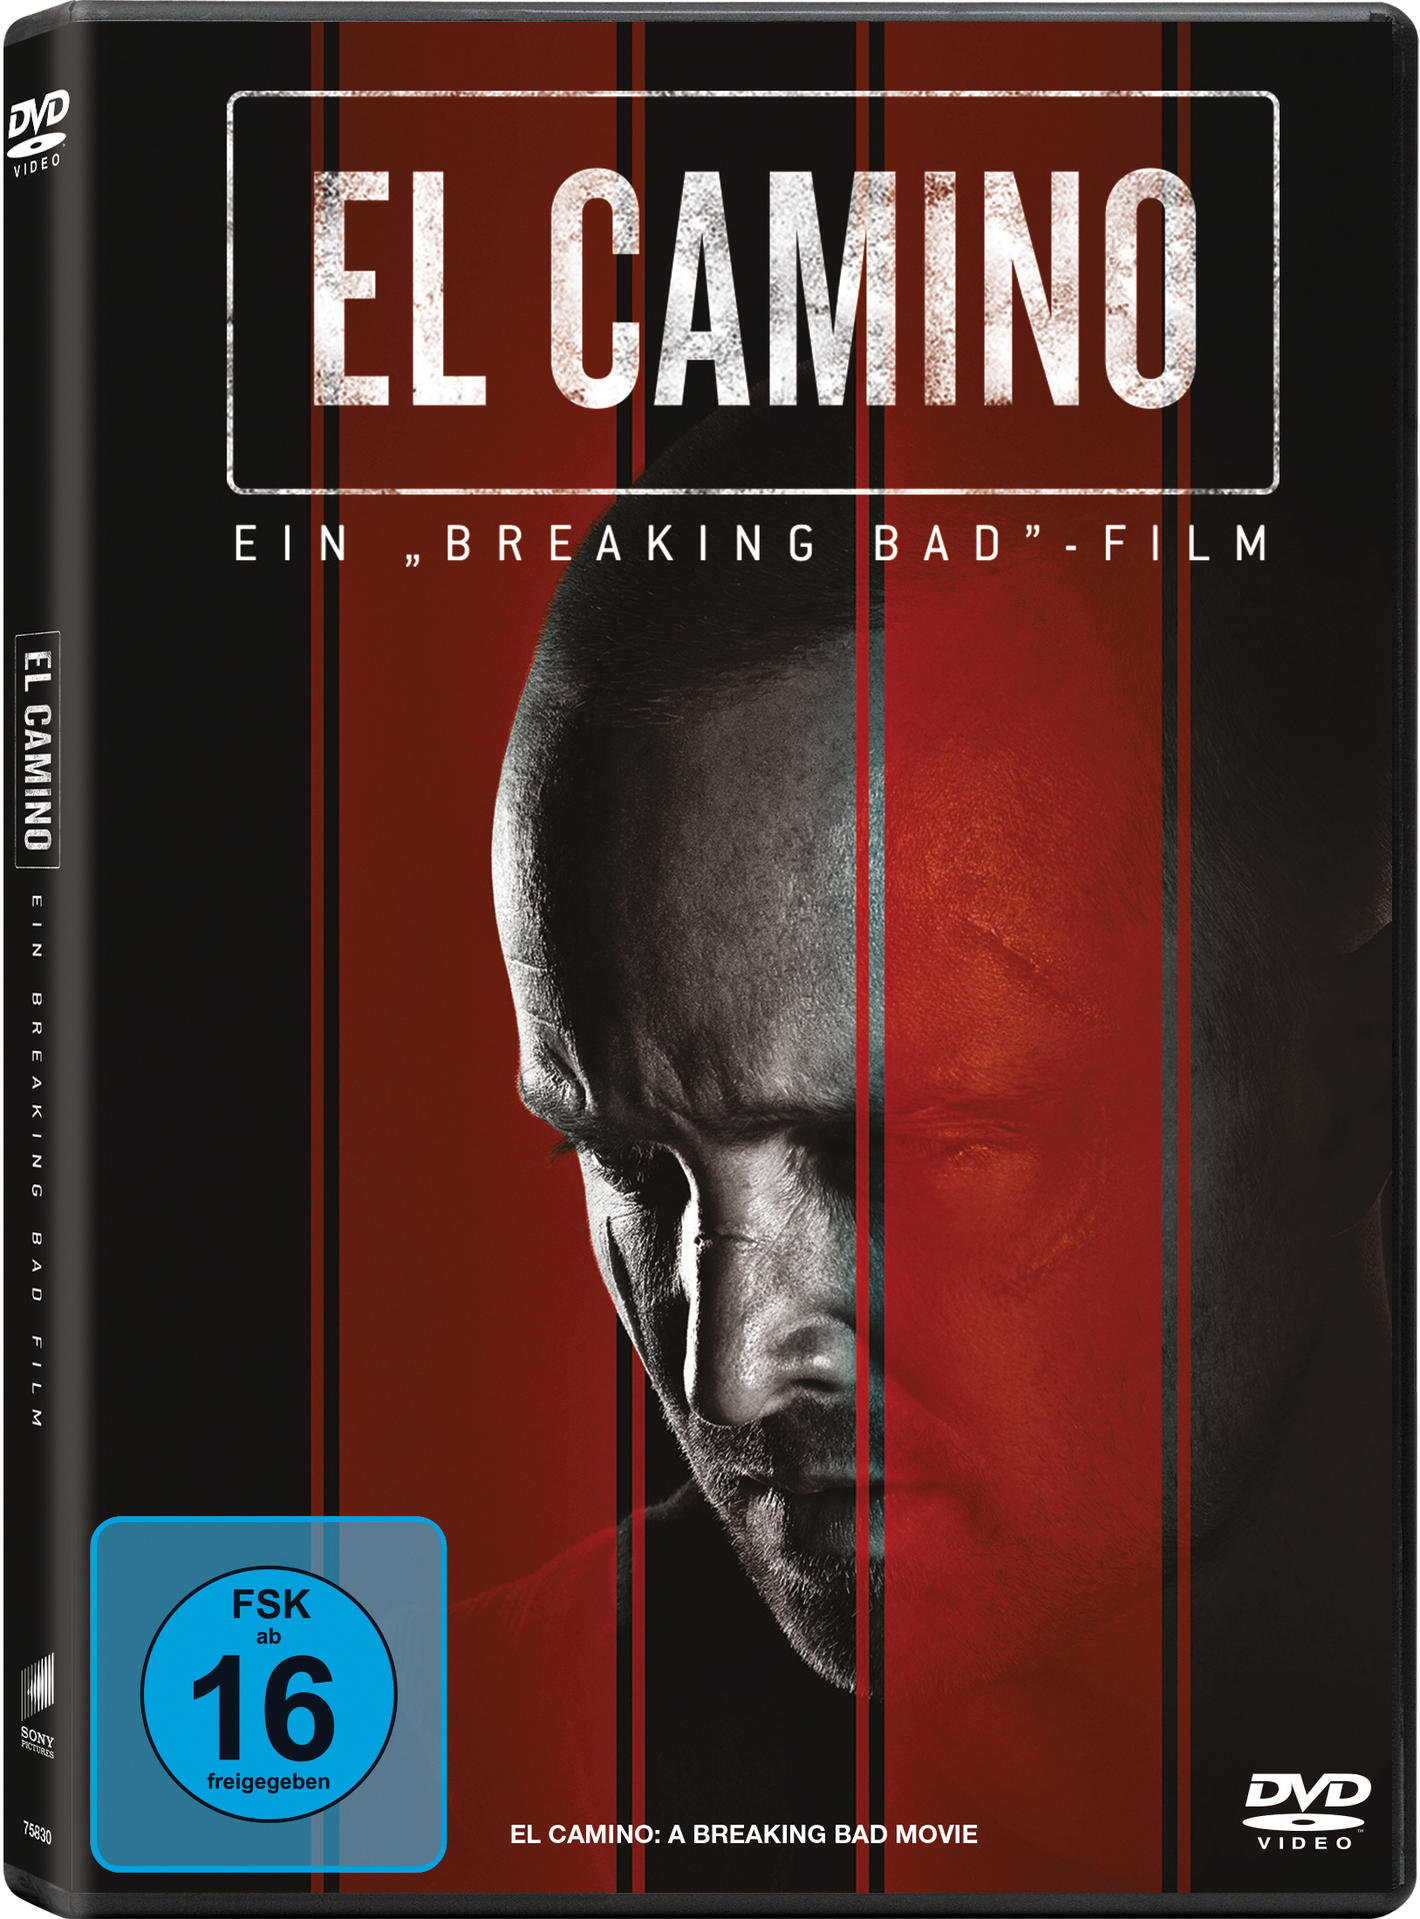 El Camino: Ein „Breaking Bad”-Film DVD